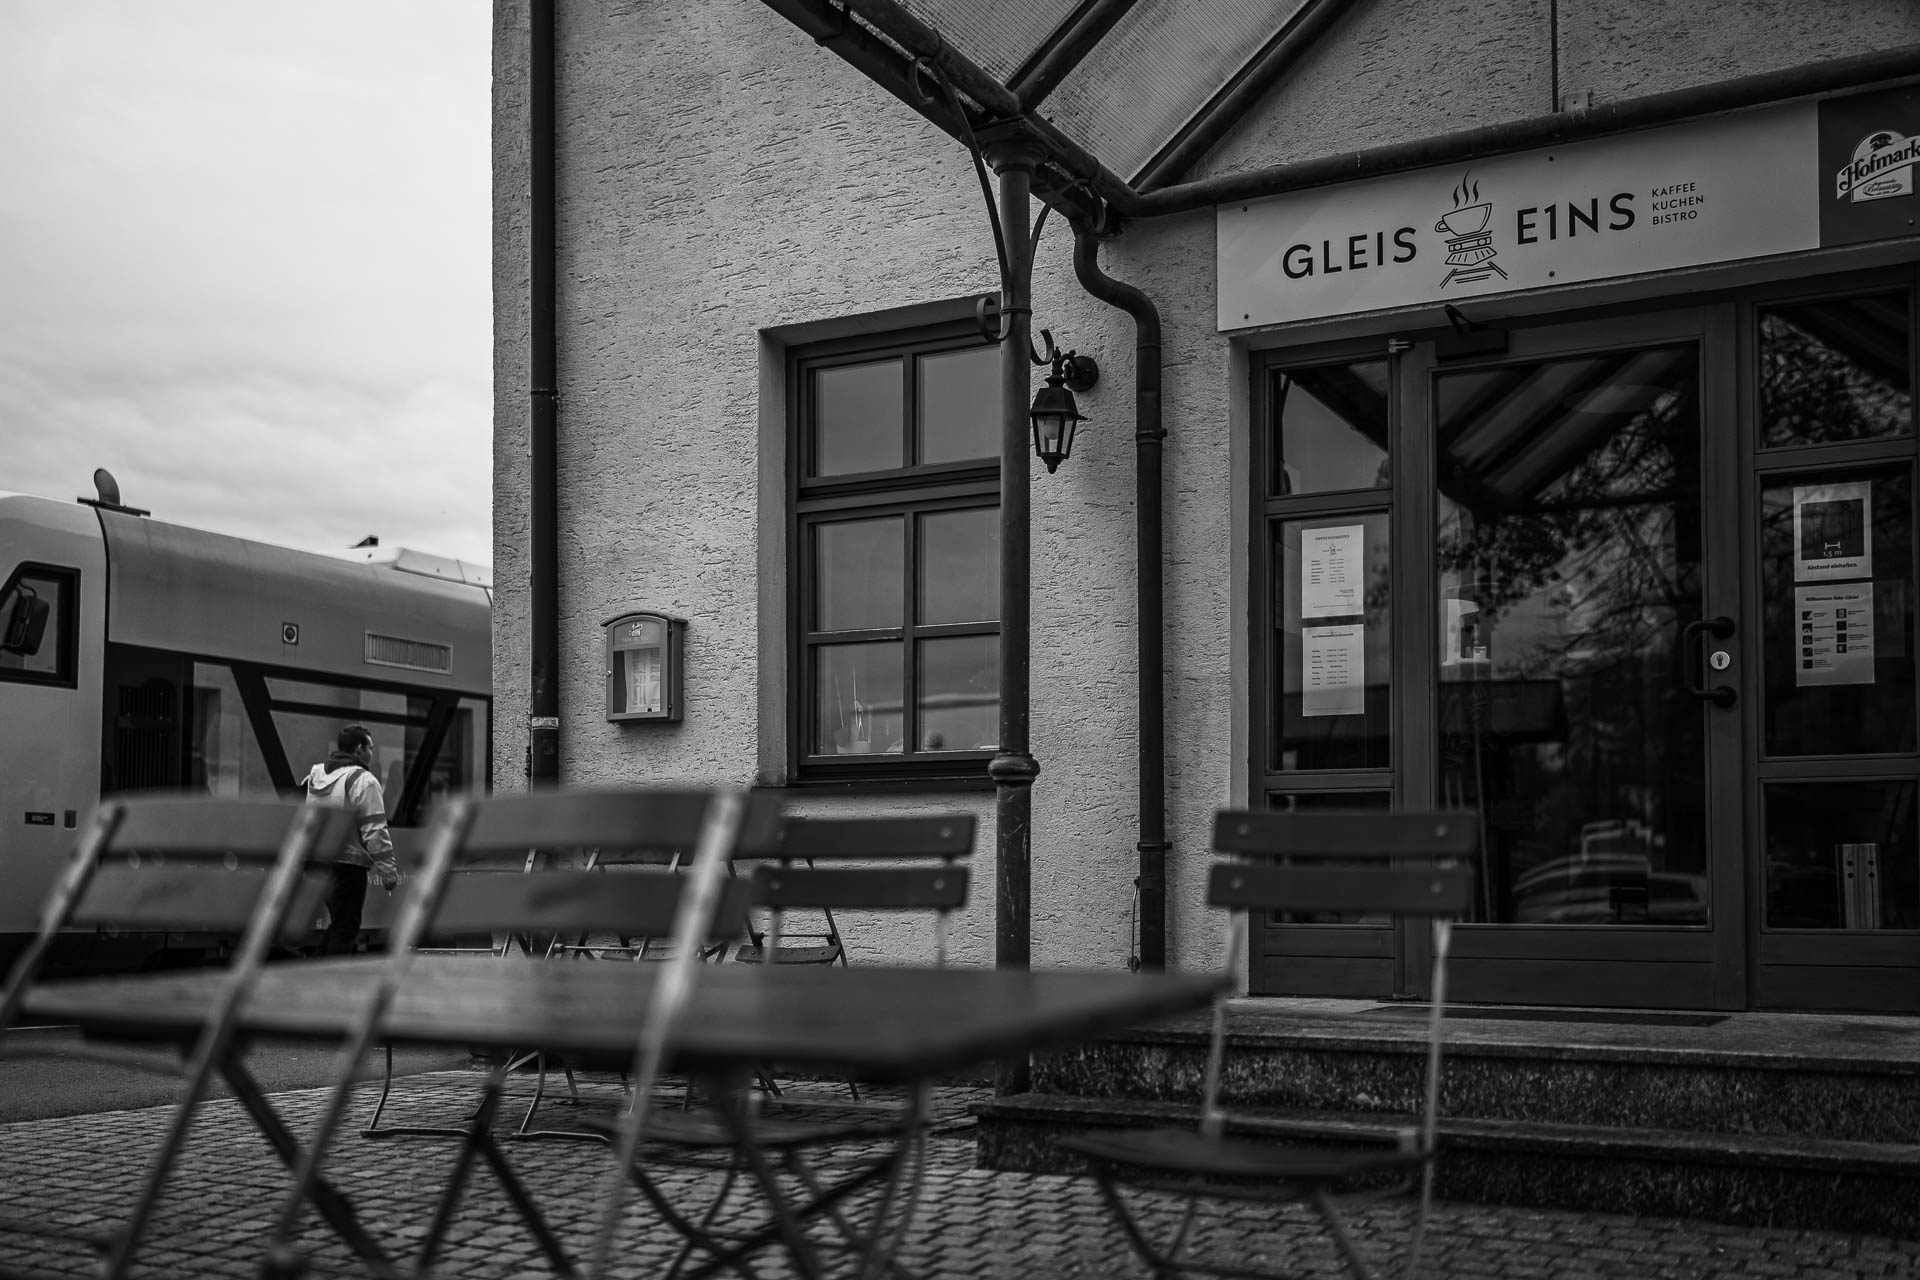 Cafe Gleis E1NS am Bahnhof Viechtach mit Waldbahn